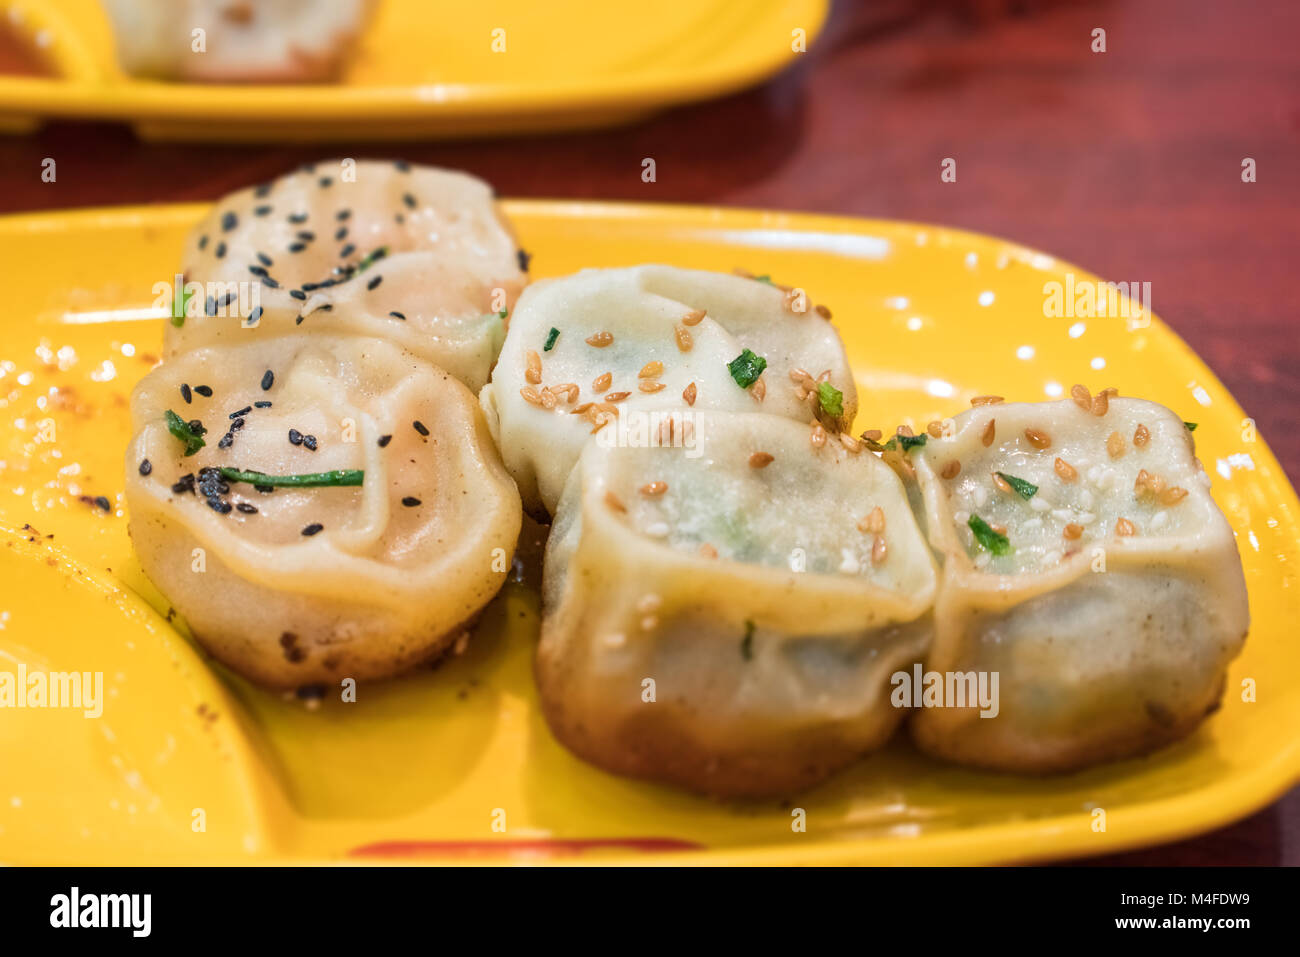 fried dumplings, shanghai delicacy Stock Photo